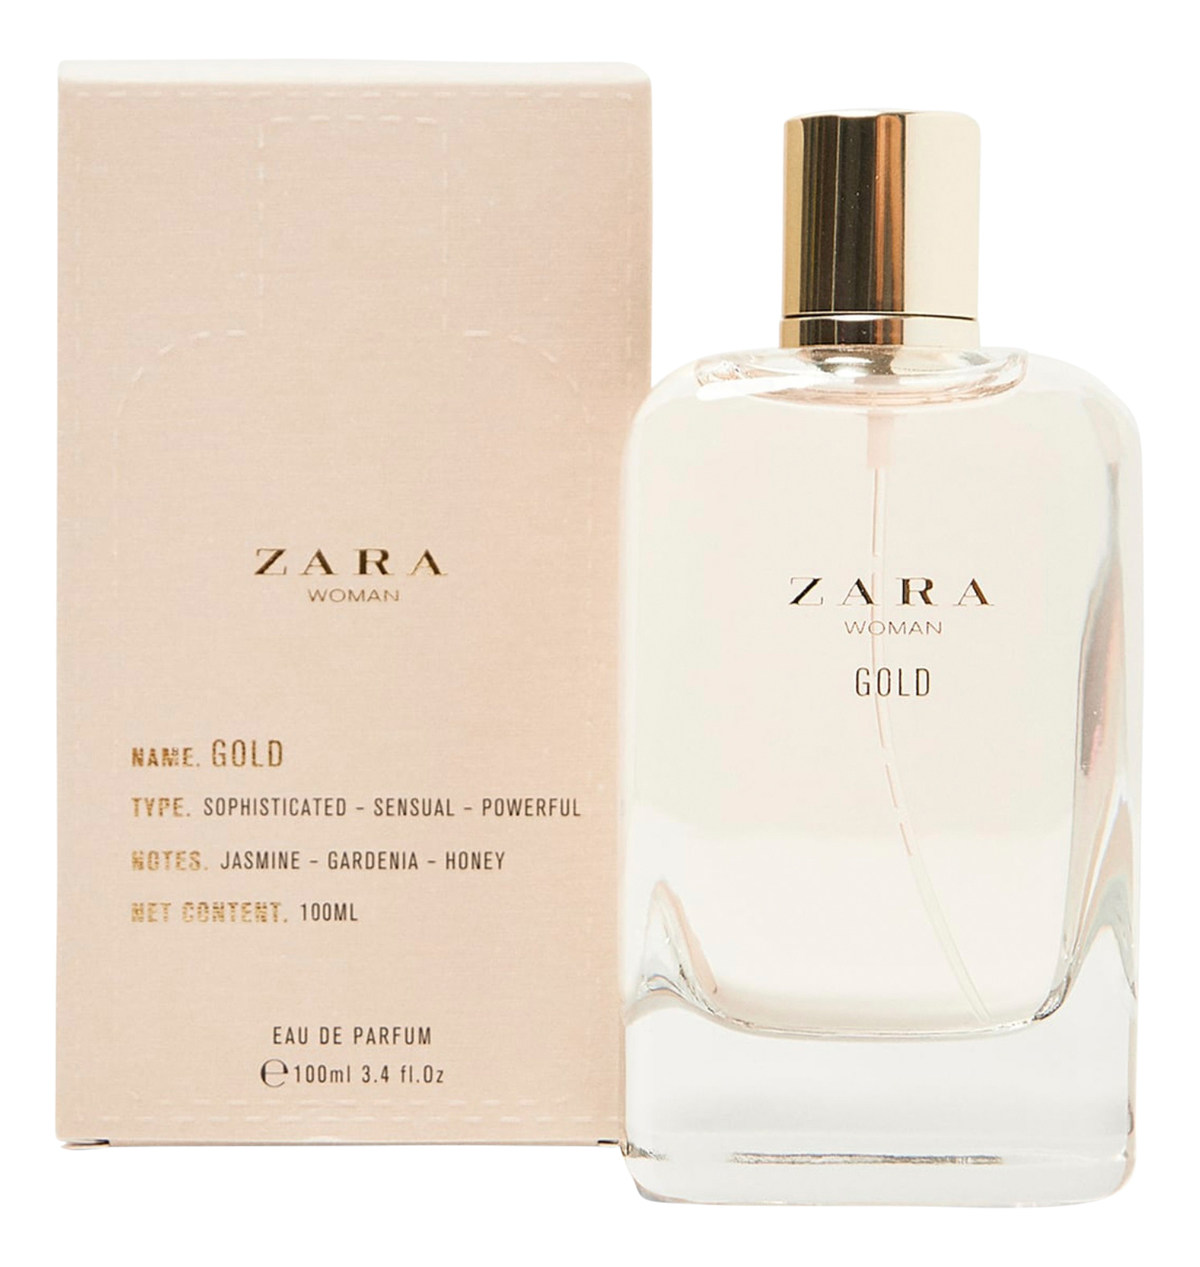 Zara - Woman Gold Eau de Parfum 